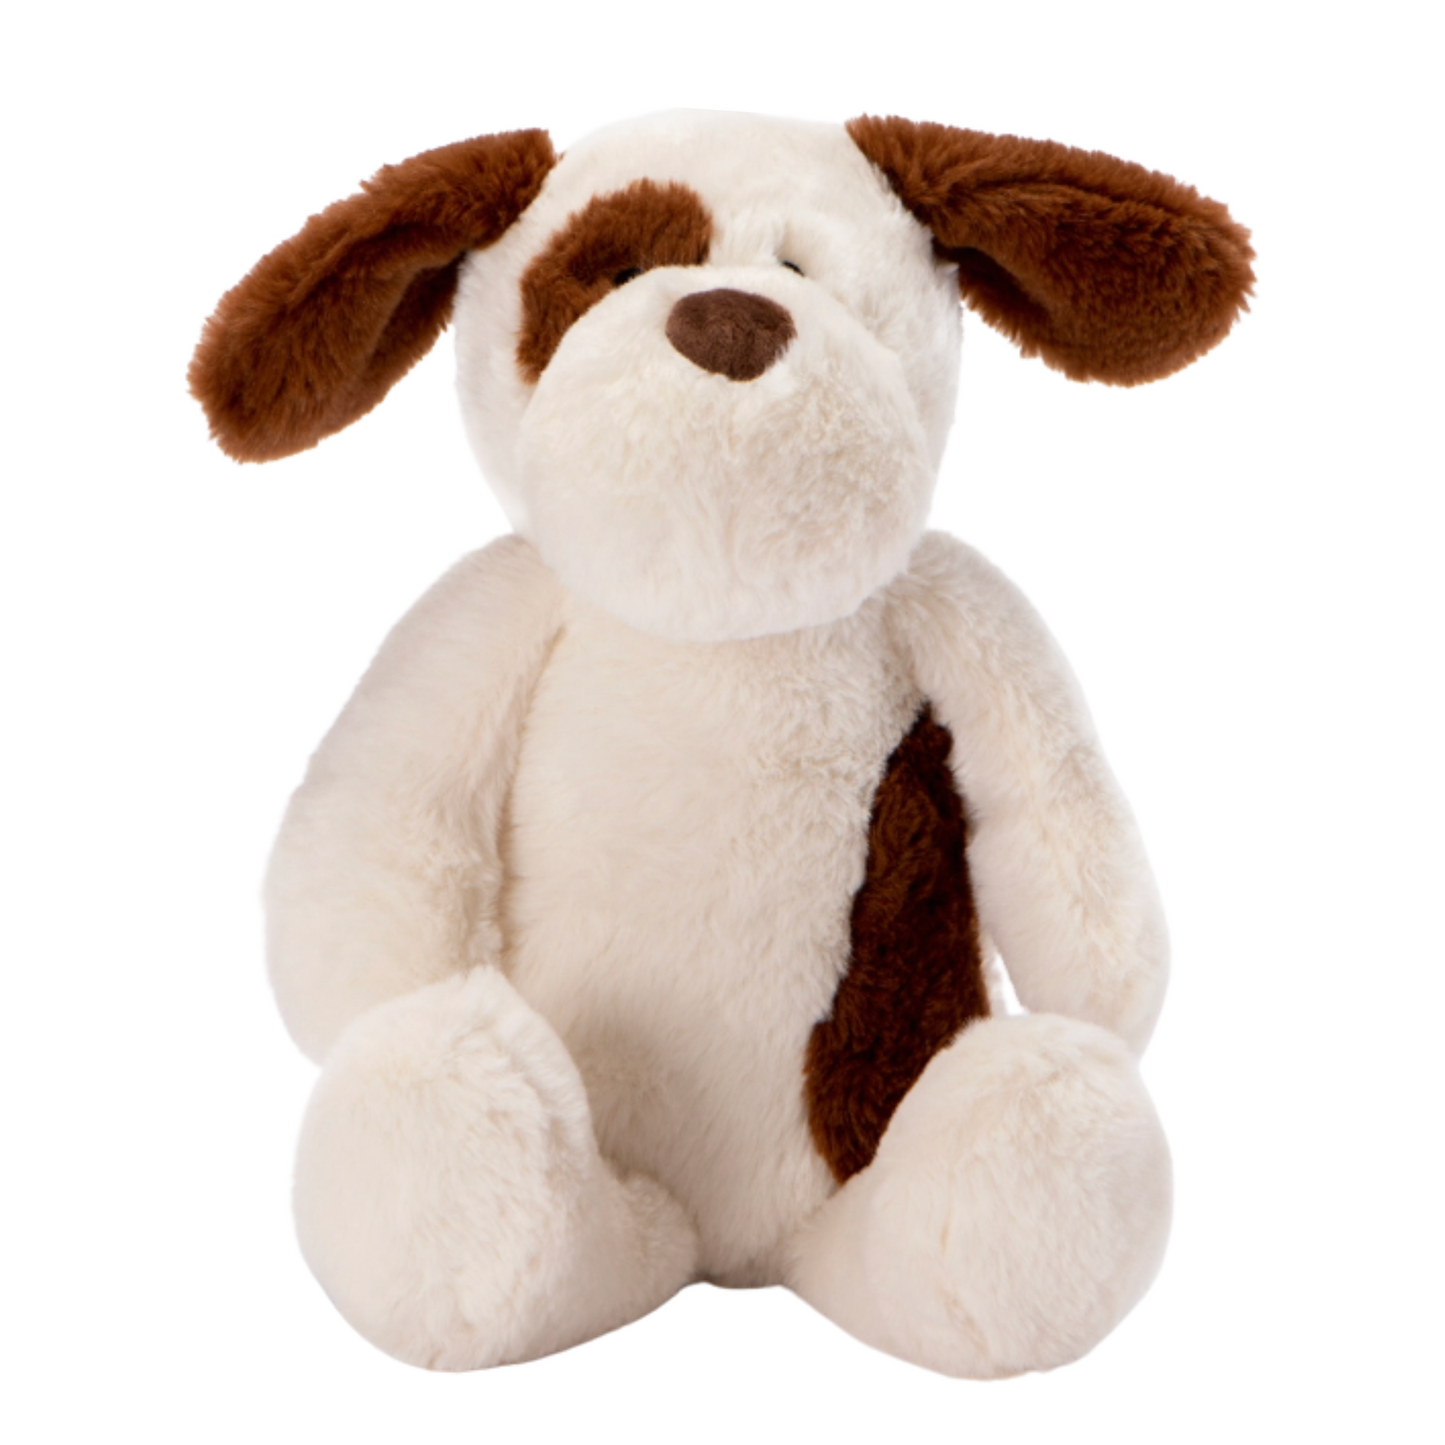 Nandog Pet Gear Dog Soft Plush Squeaky Stuffed Toy